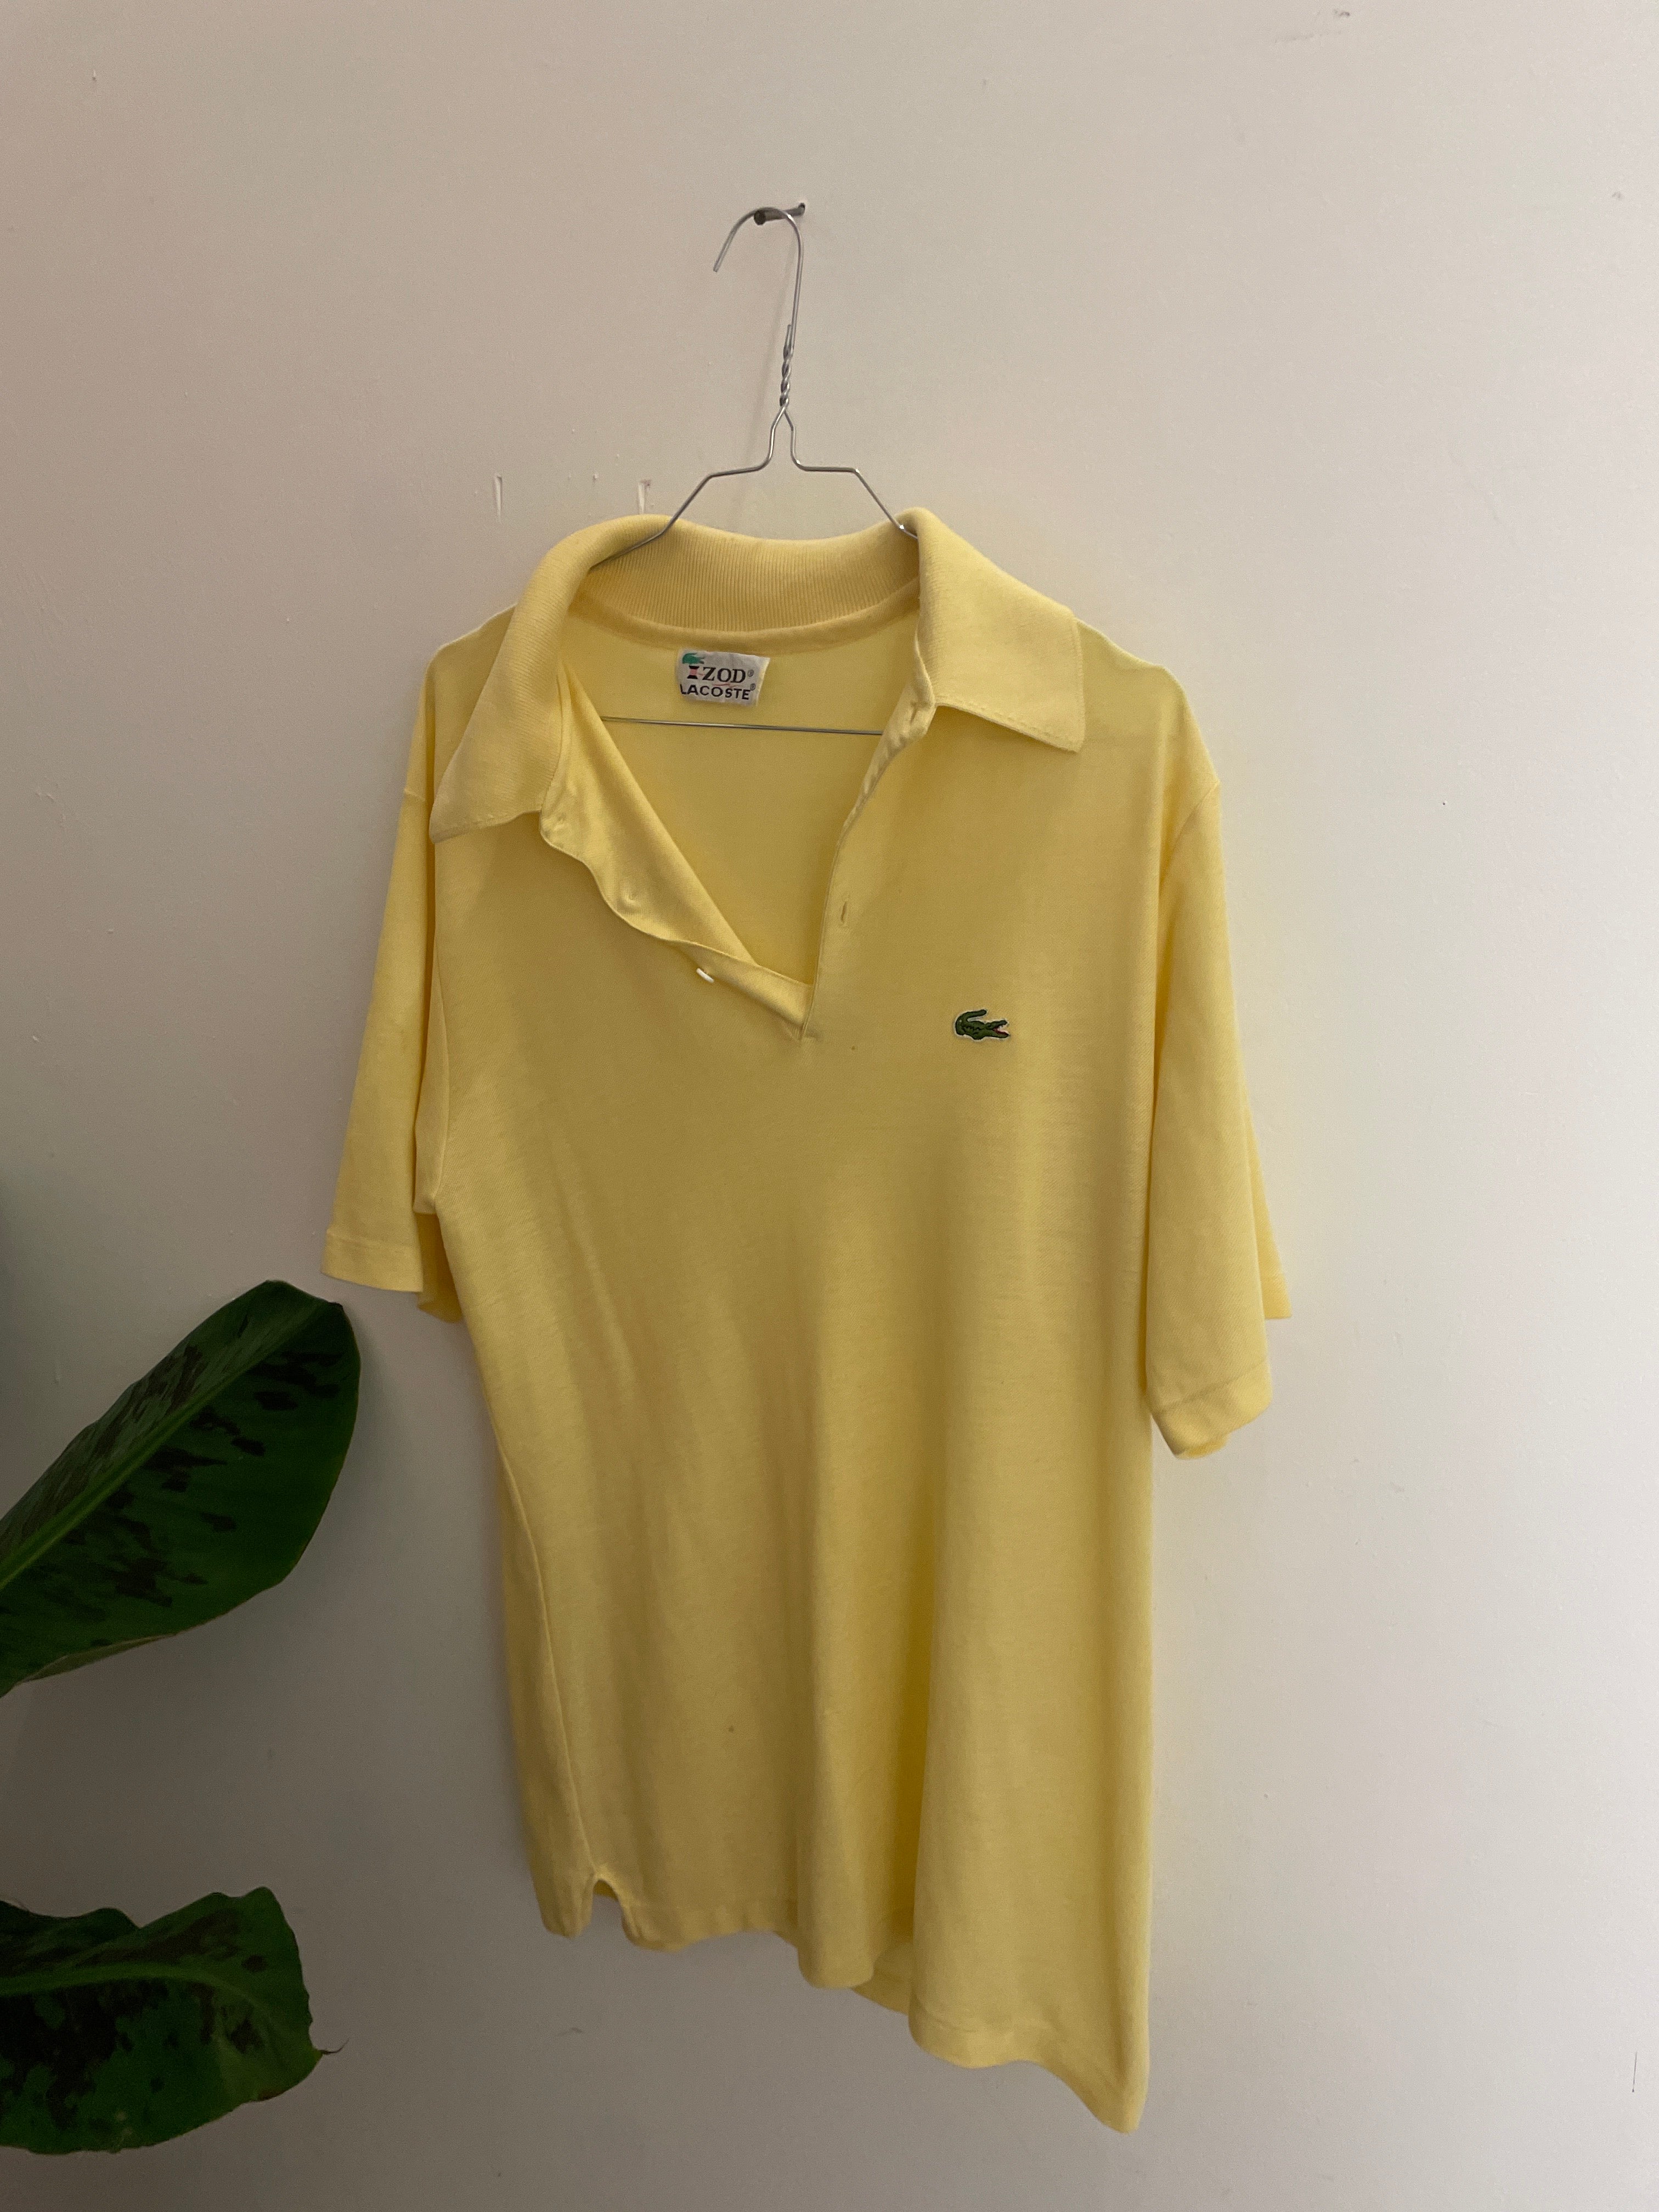 Vintage izod lacoste mens yellow polo shirt size M